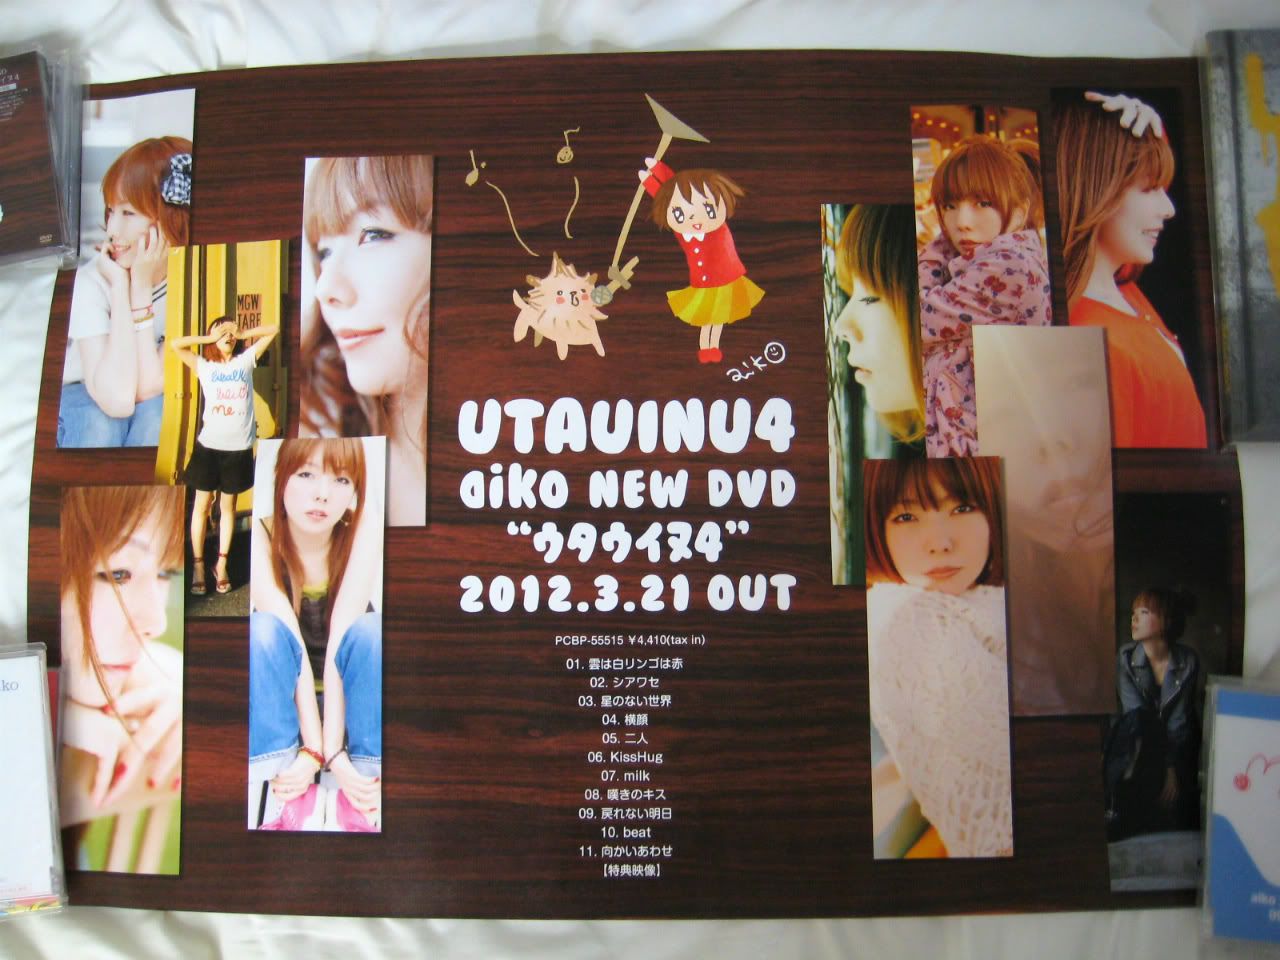 http://i1218.photobucket.com/albums/dd403/aoihikari15/CD/utauinu4/utauinu4_057.jpg